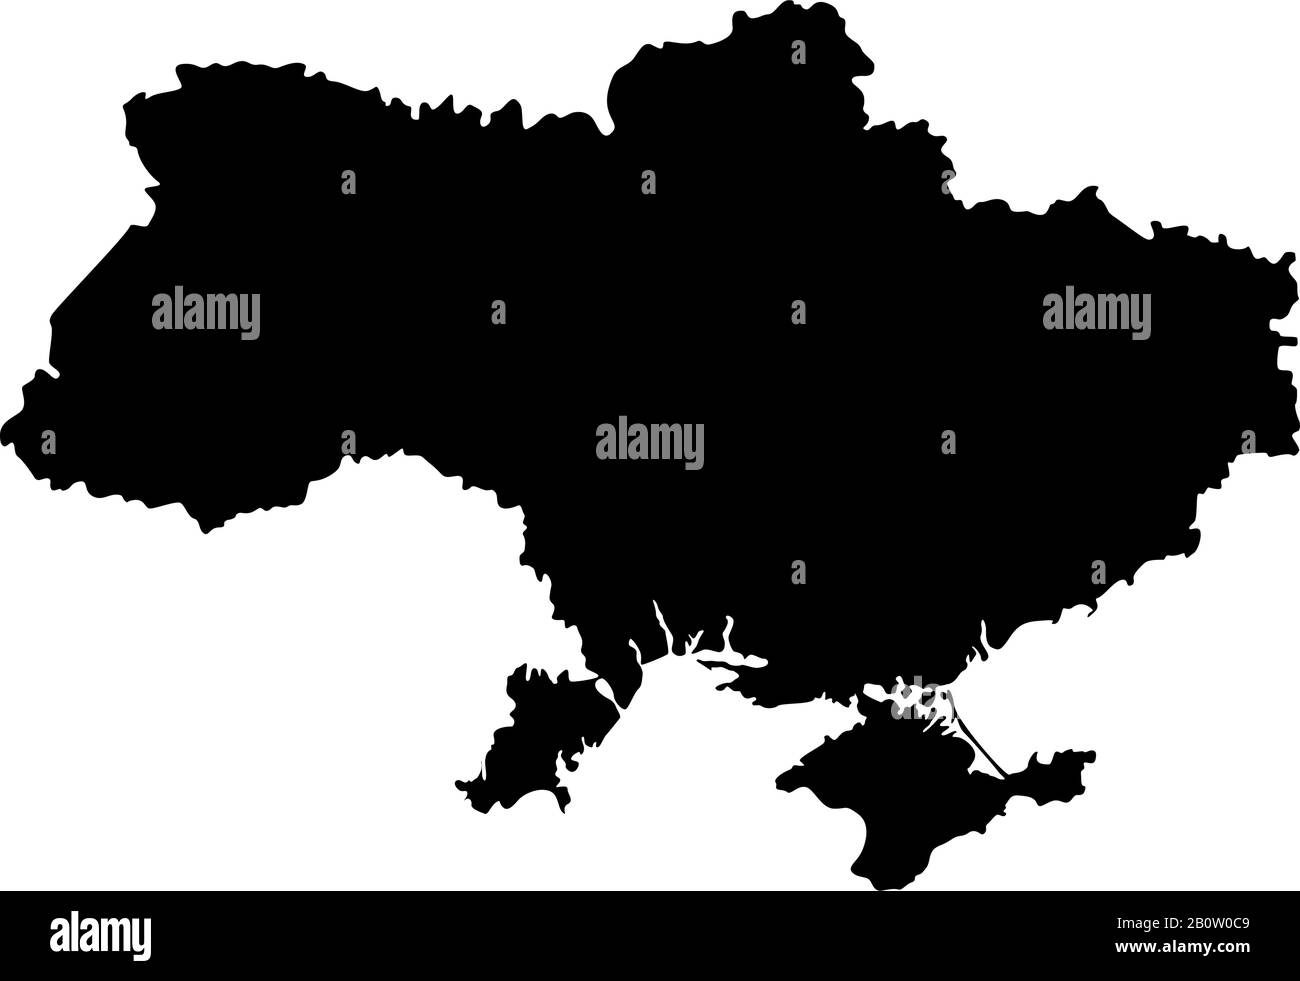 Karte Ukraine Symbol schwarz Farbe Vektor Illustration flaches Design einfaches Bild Stock Vektor